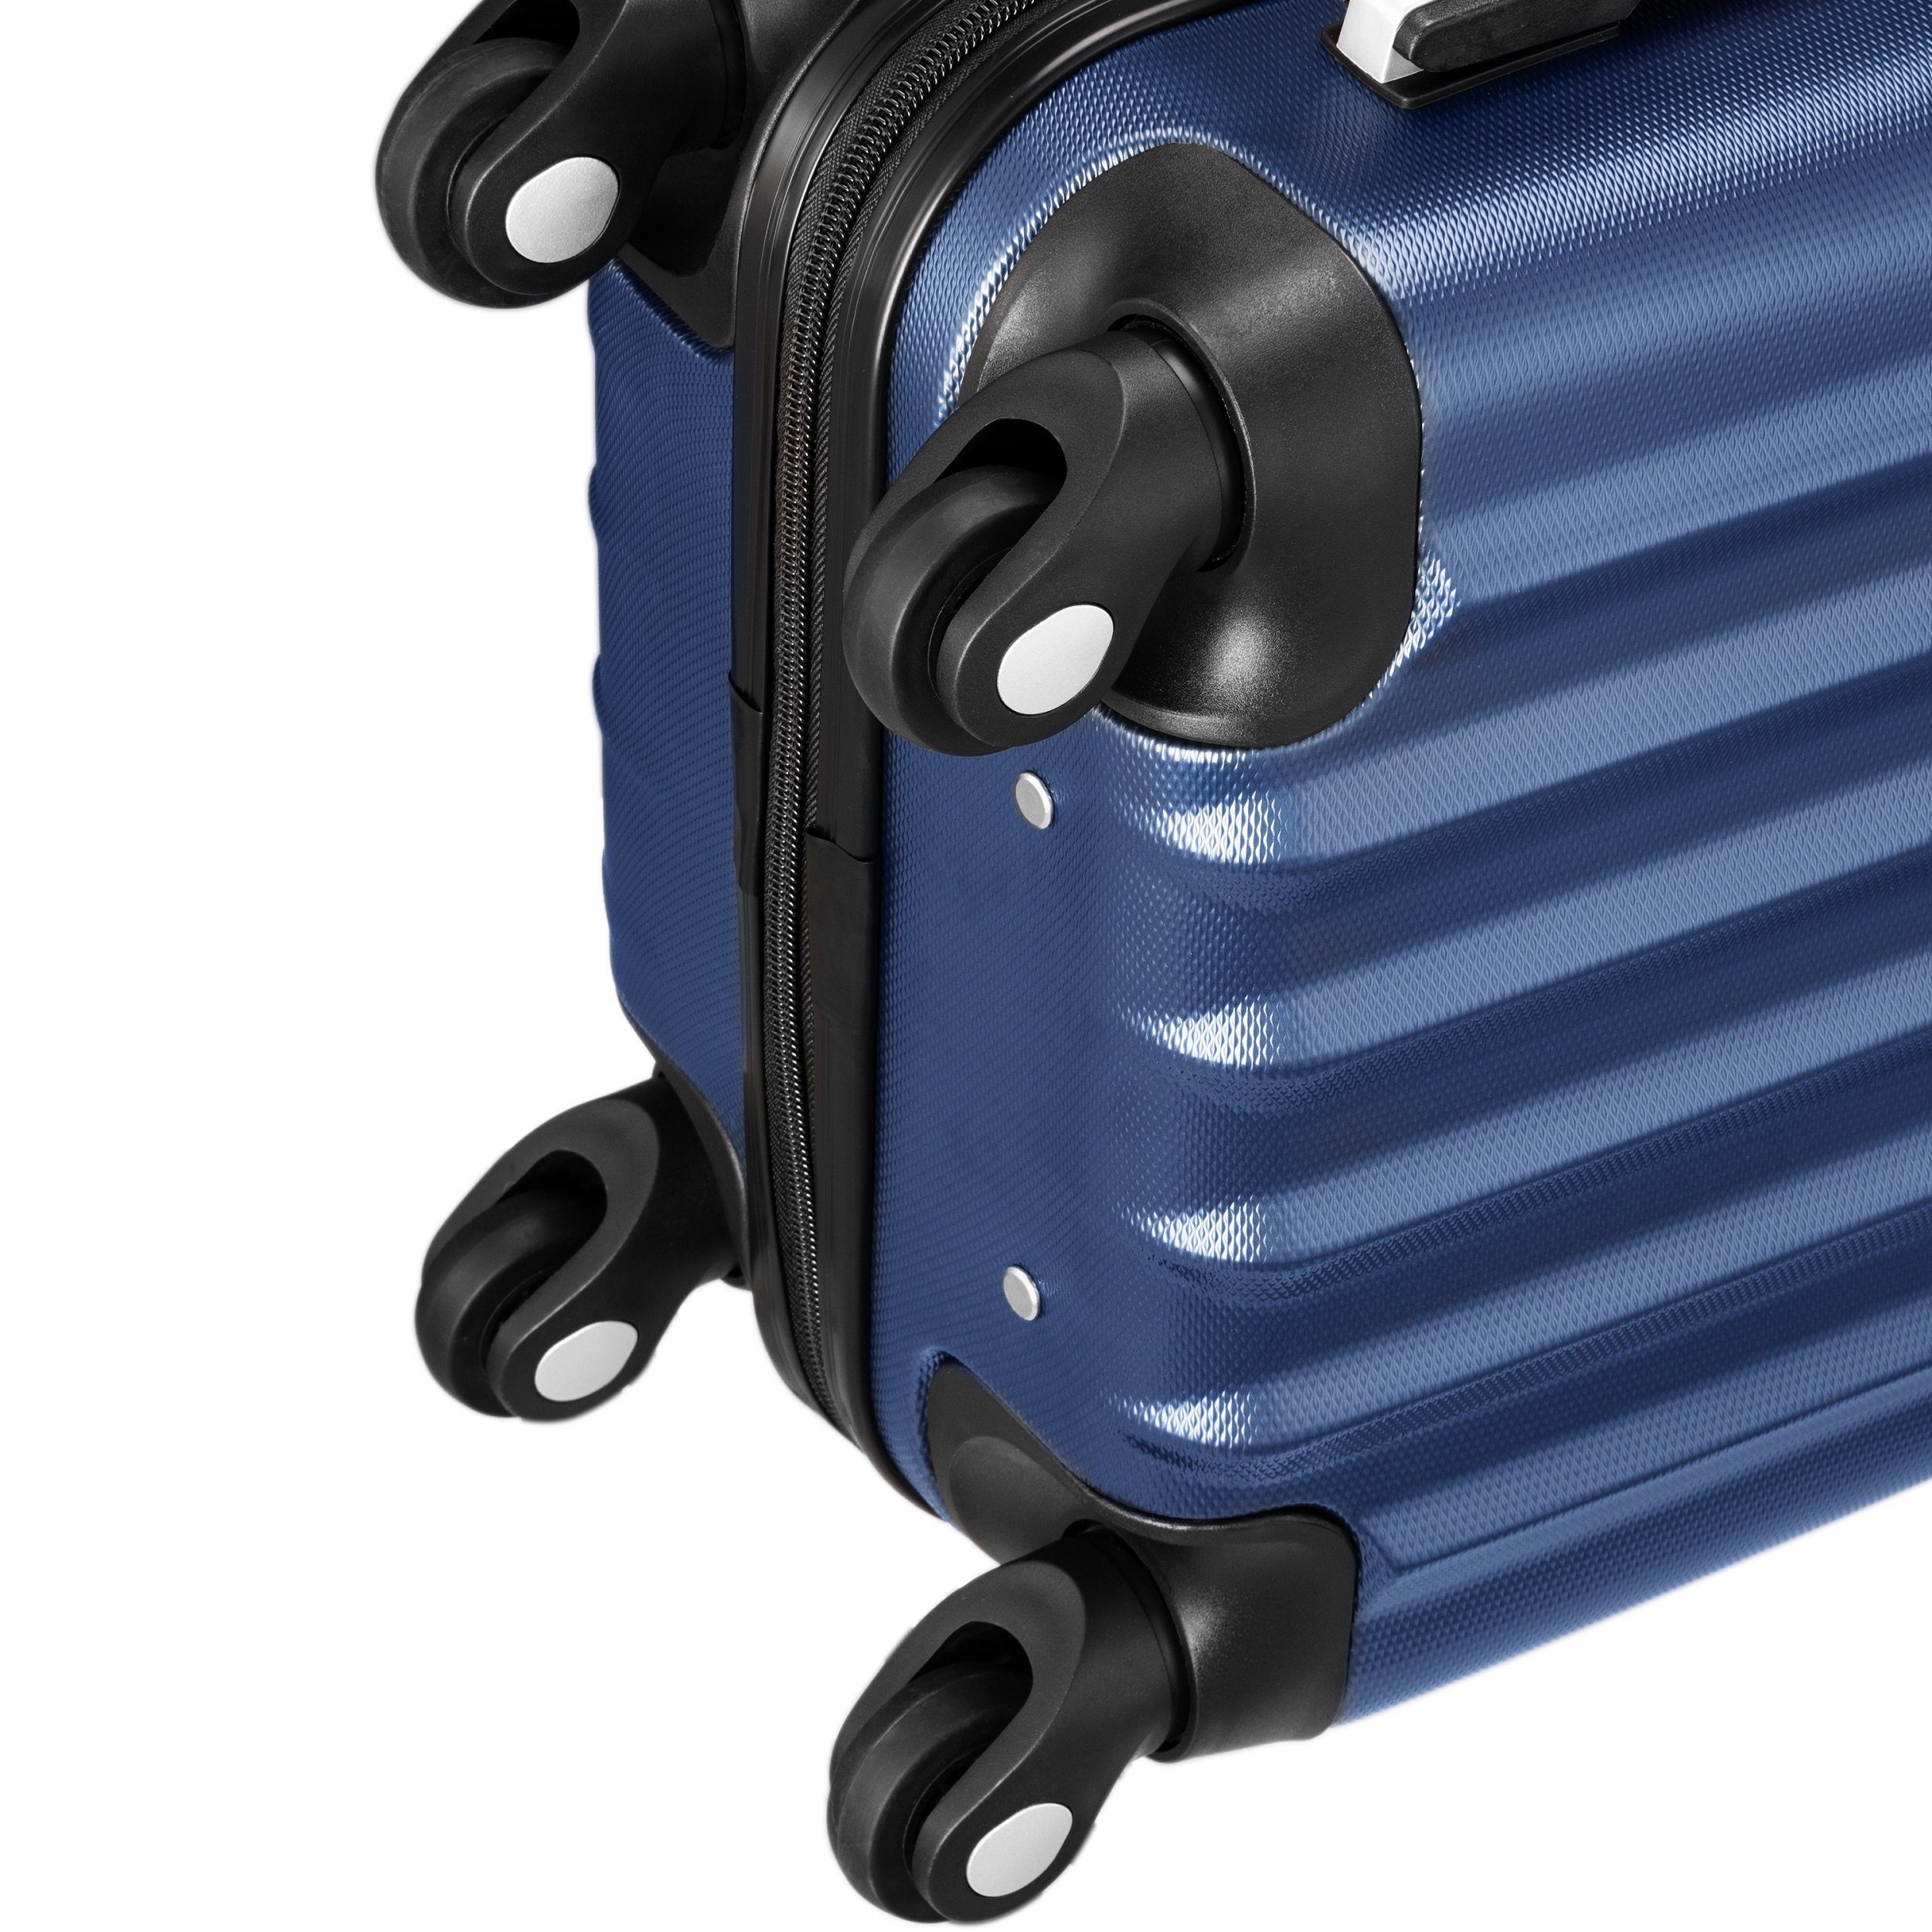 KOFFER-BARON* Koffer Trolley Hartschalenkoffer XL naviblau ABS, Reisegepäck Basic